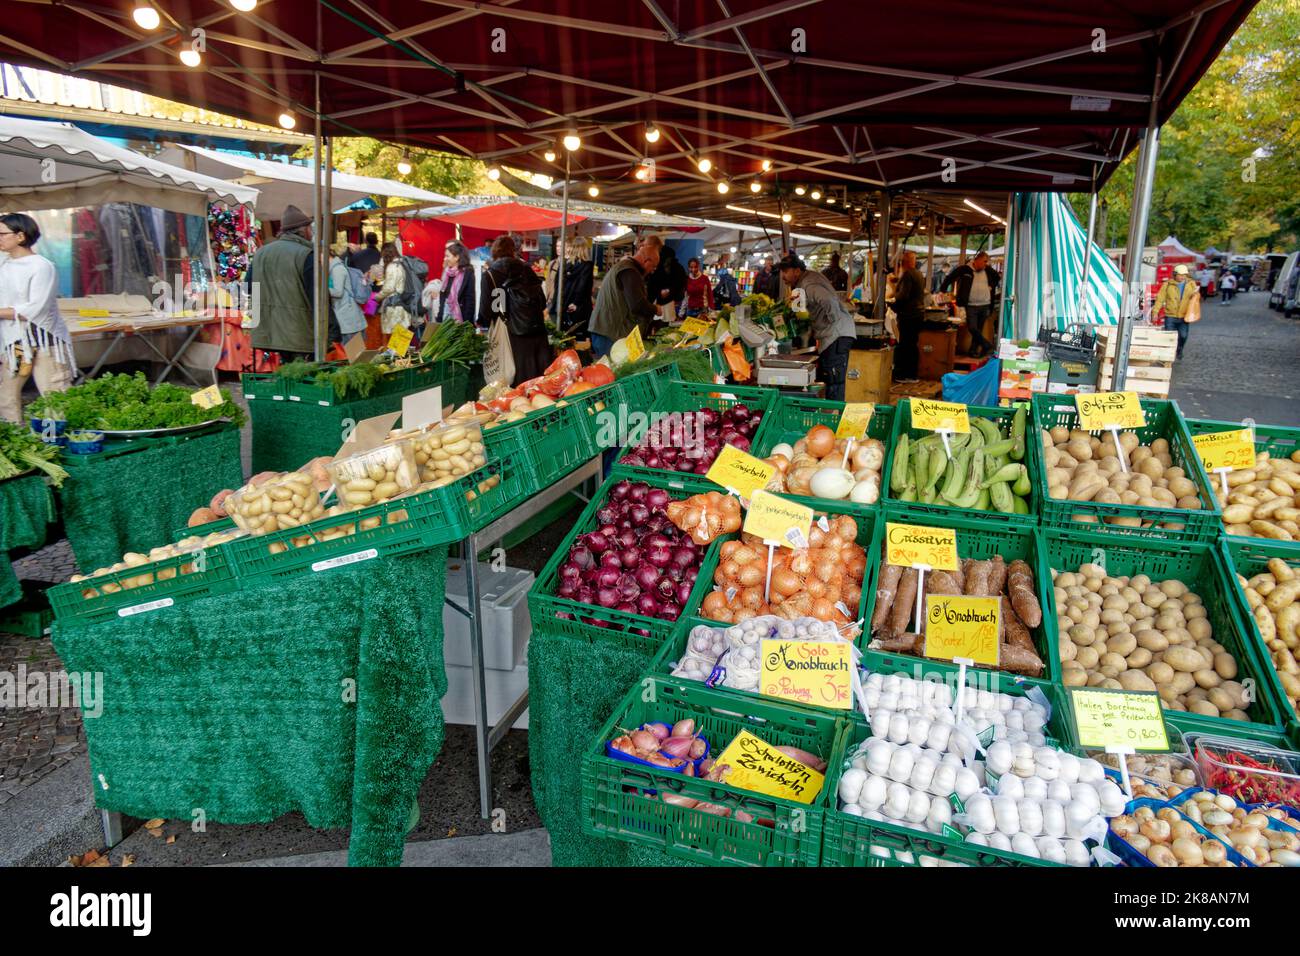 Markt am Maybachufer, Obst und Gemüse, Marktstände, Berlin-Neukölln Foto Stock